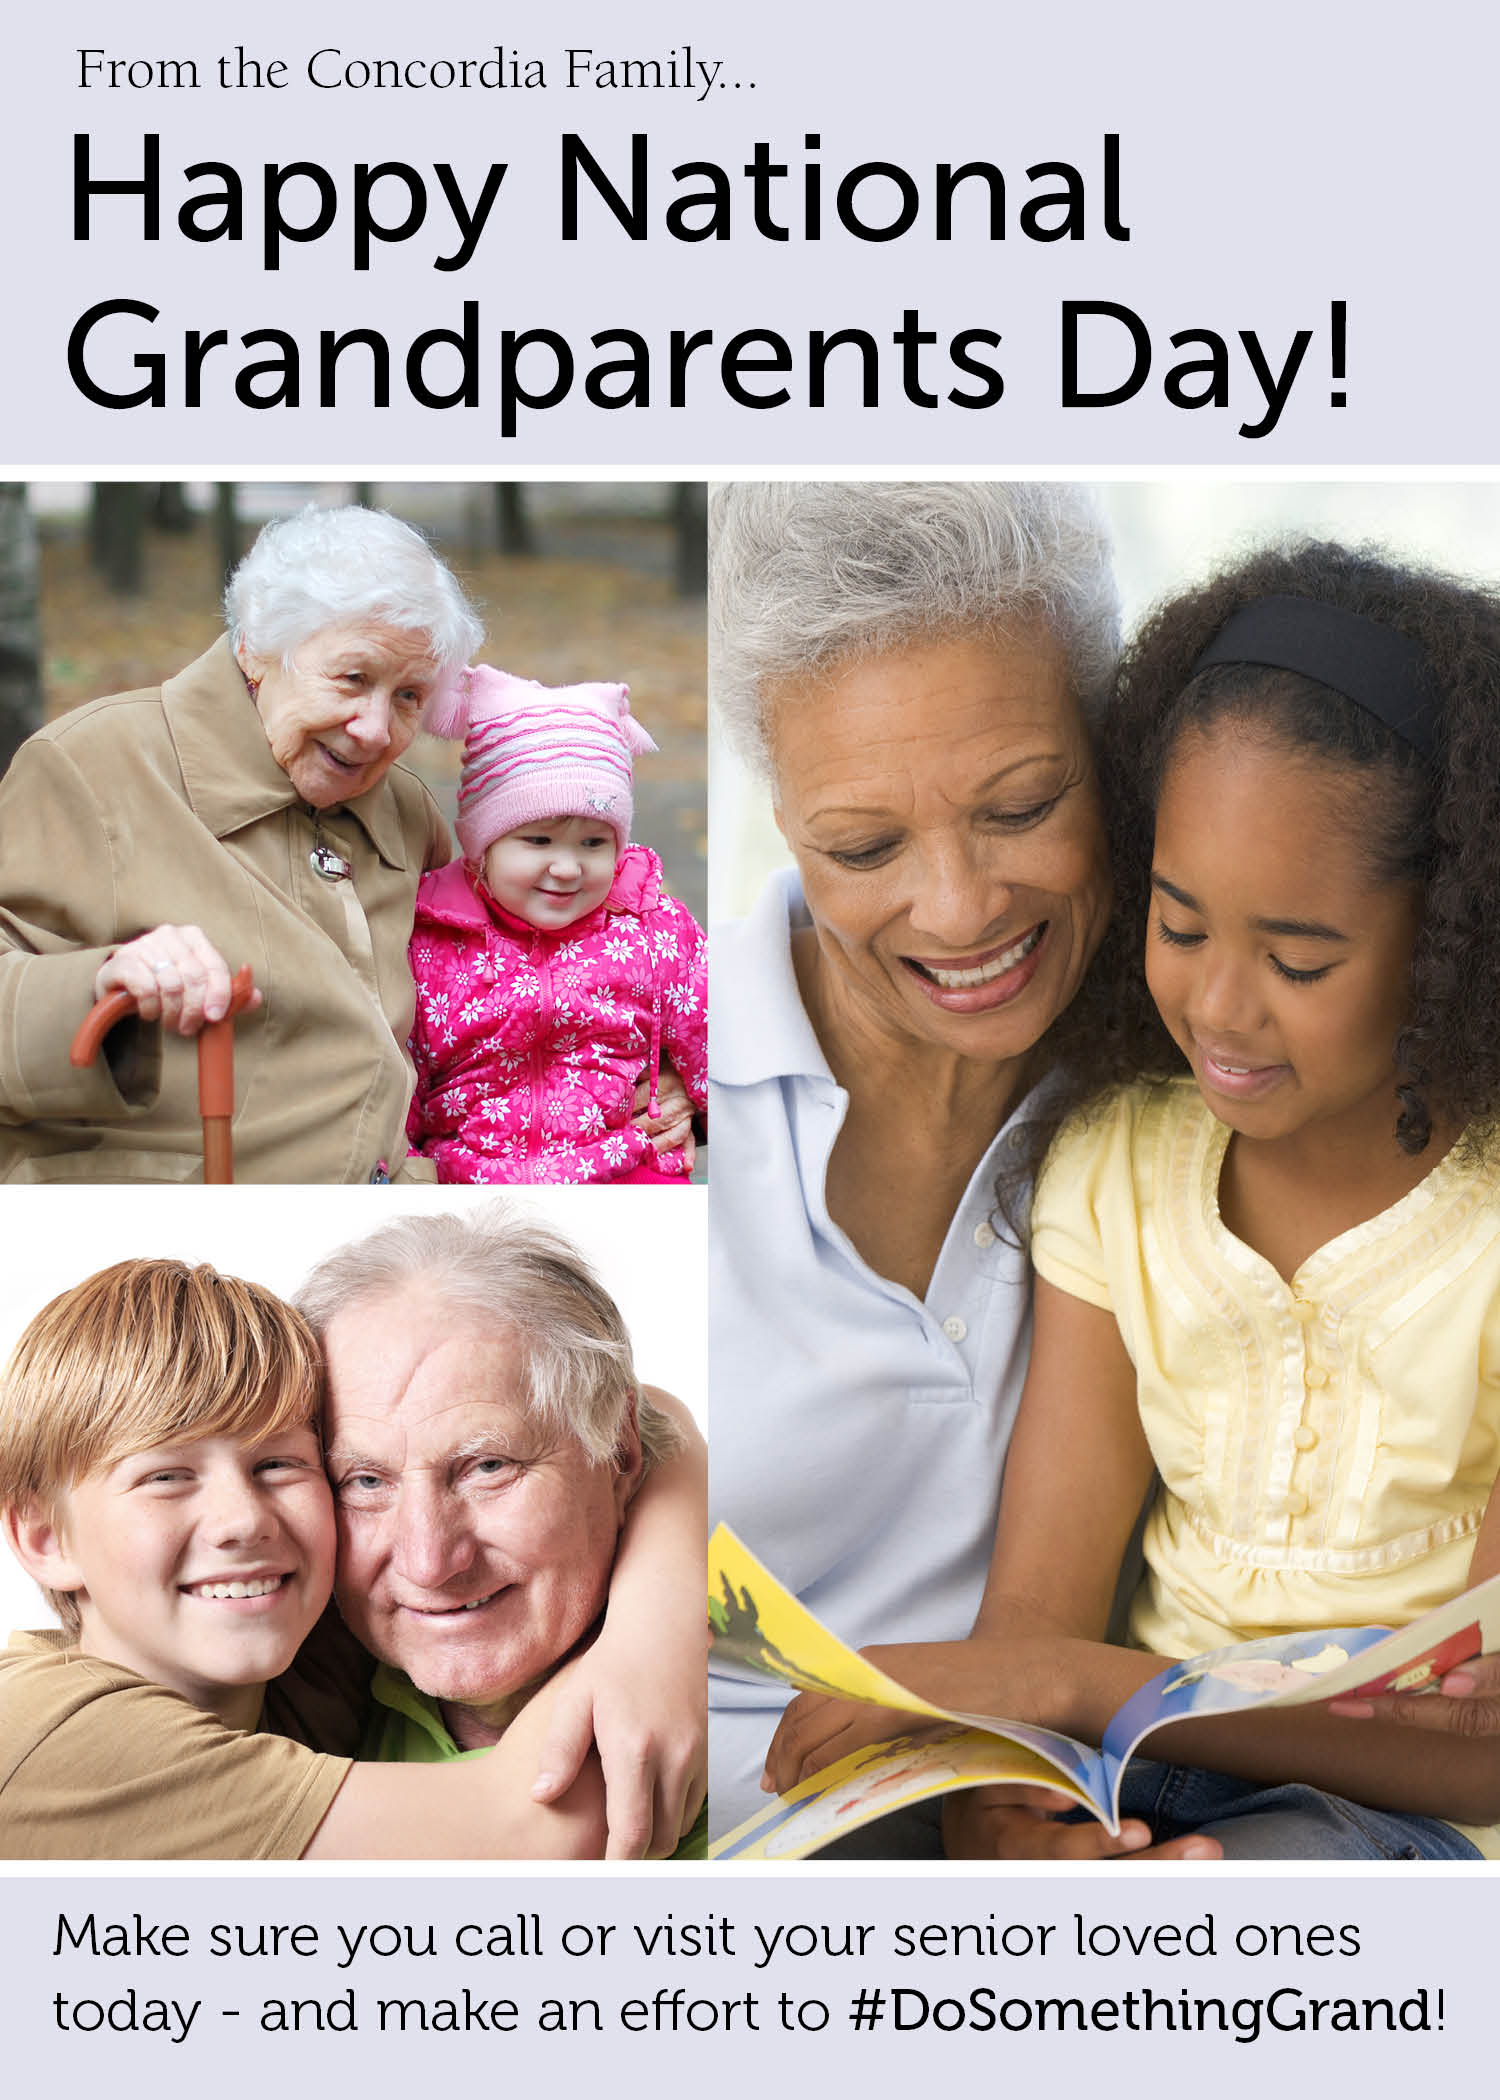 Grandparents Day 2016 image